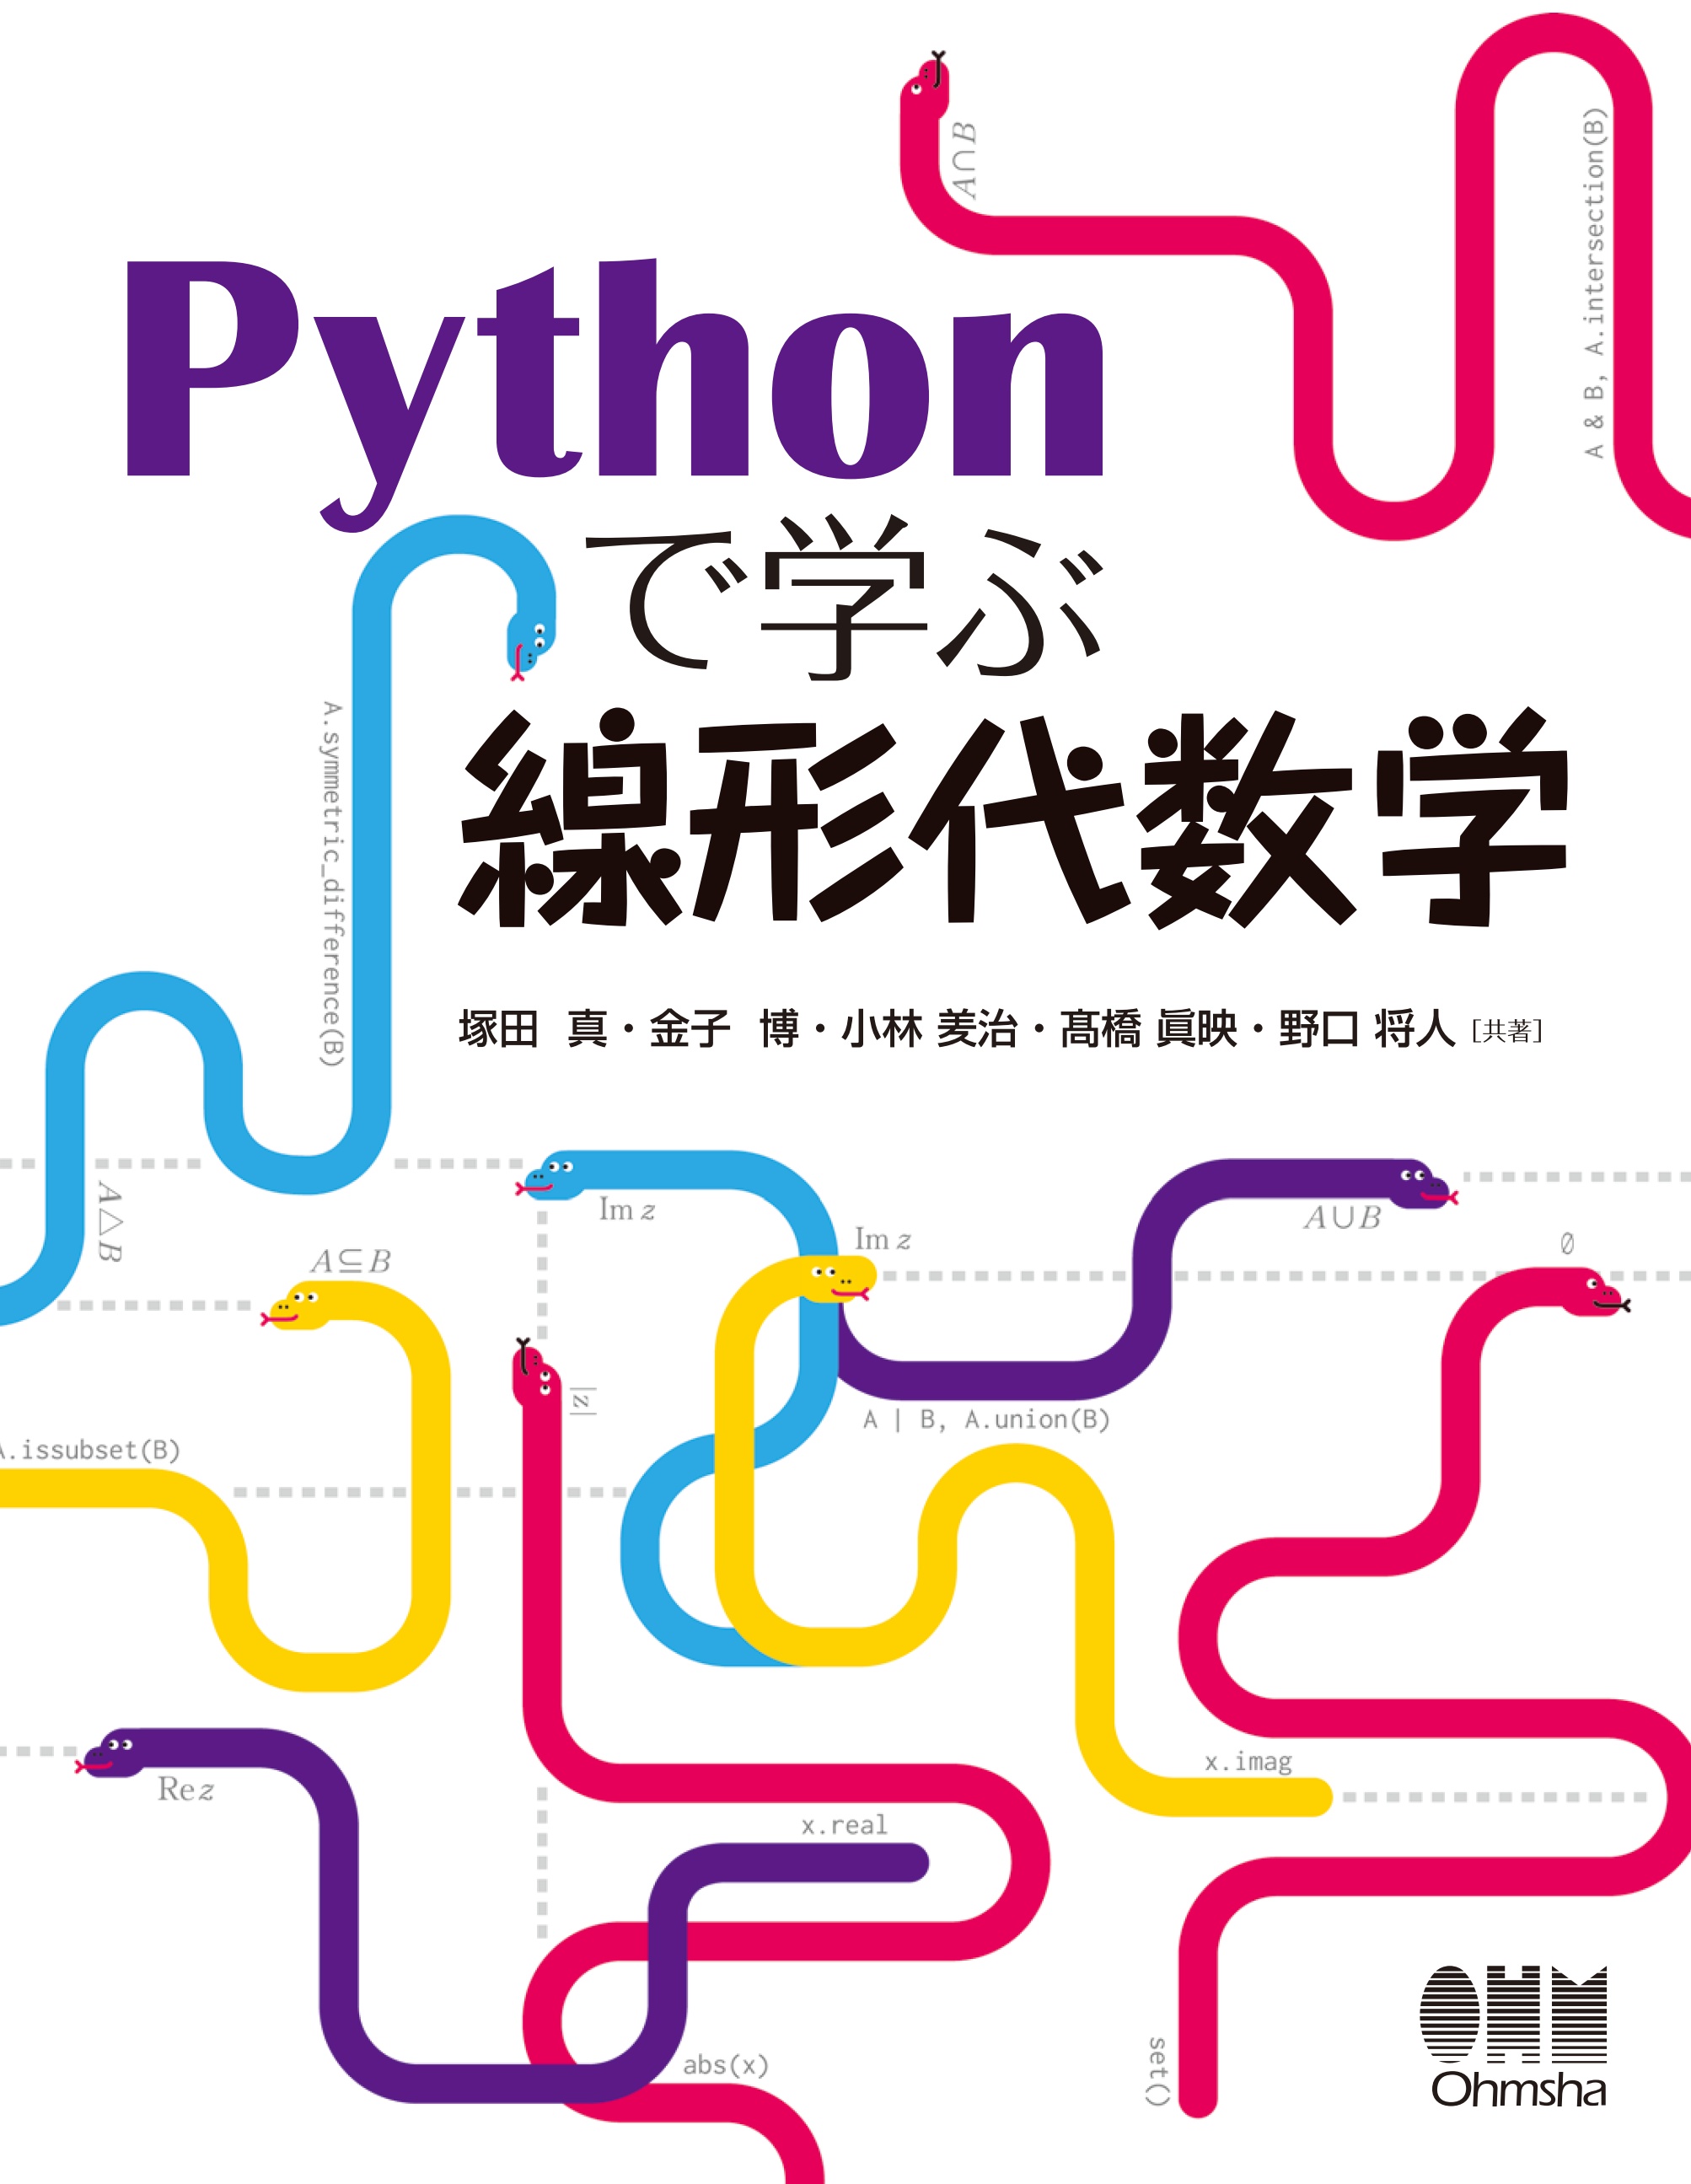 Pythonで学ぶ線形代数学 - 塚田真/金子博 - ビジネス・実用書・無料 